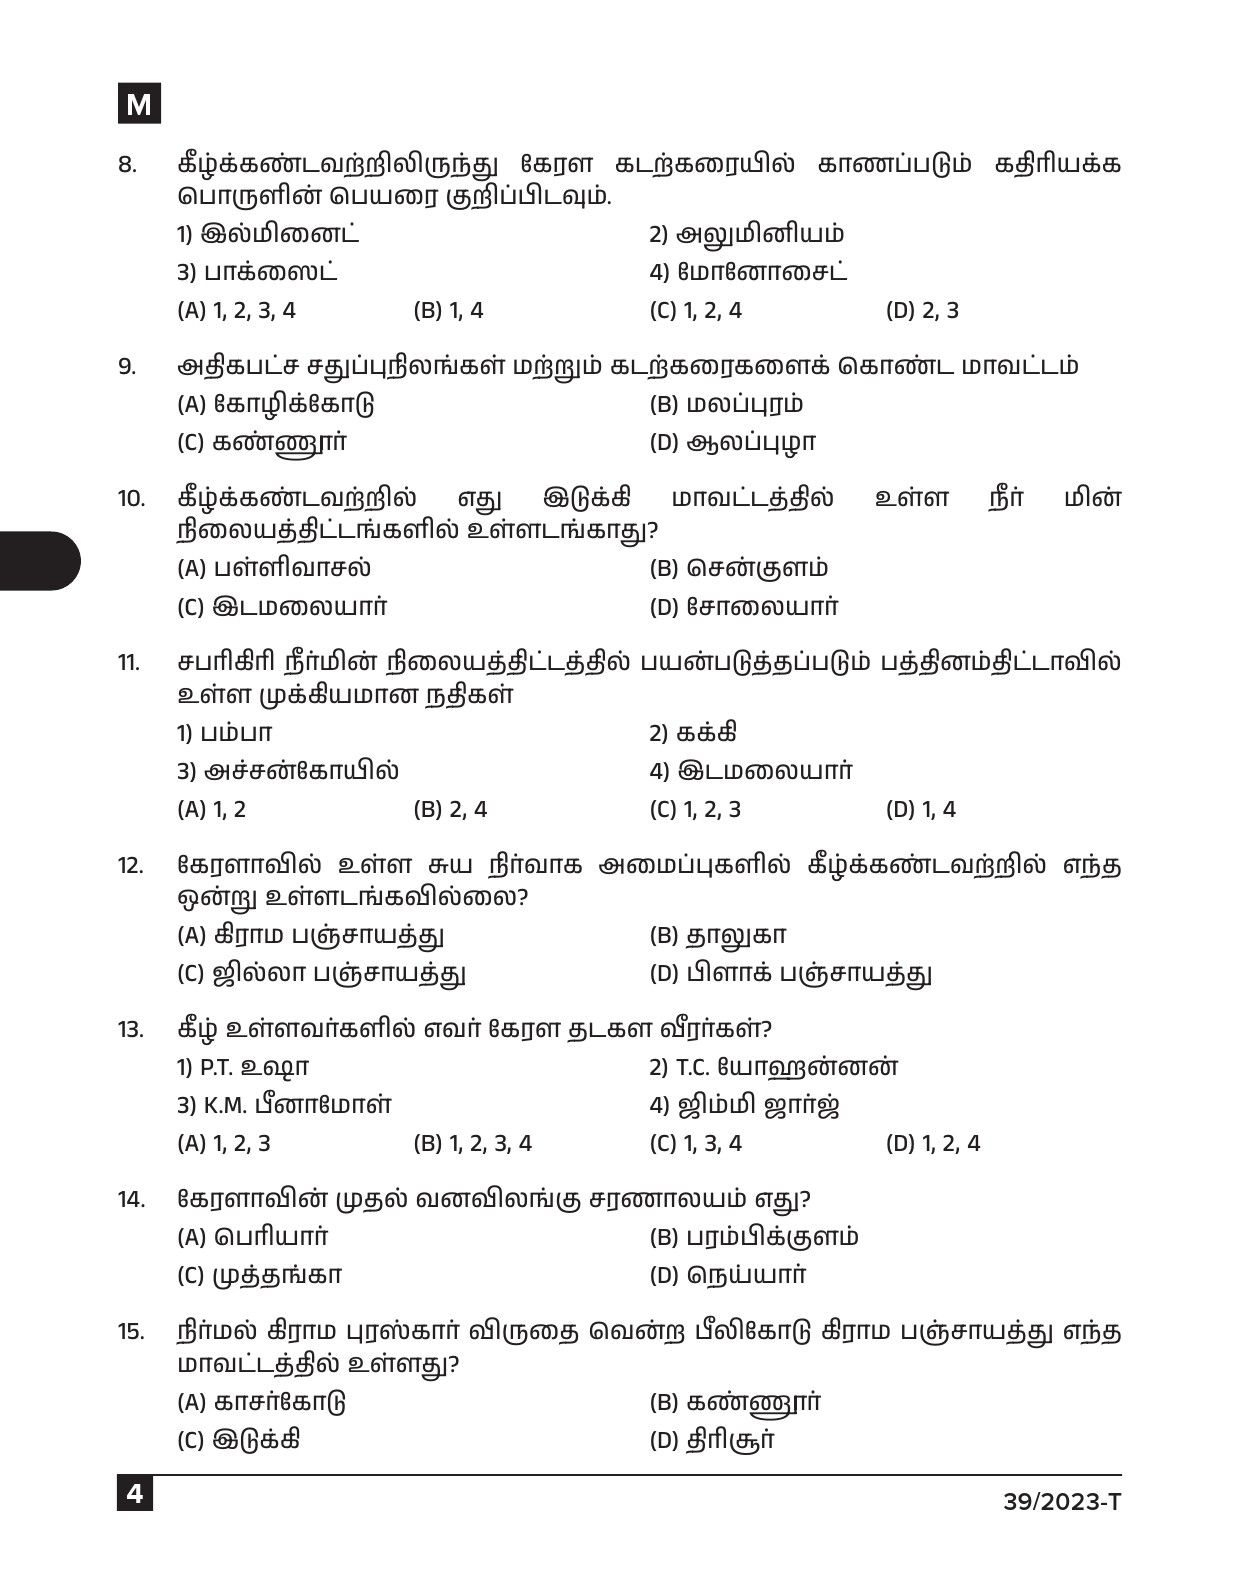 KPSC Ayah Attender Work Assistant Tamil Exam 2023 Code 0392023 T 3